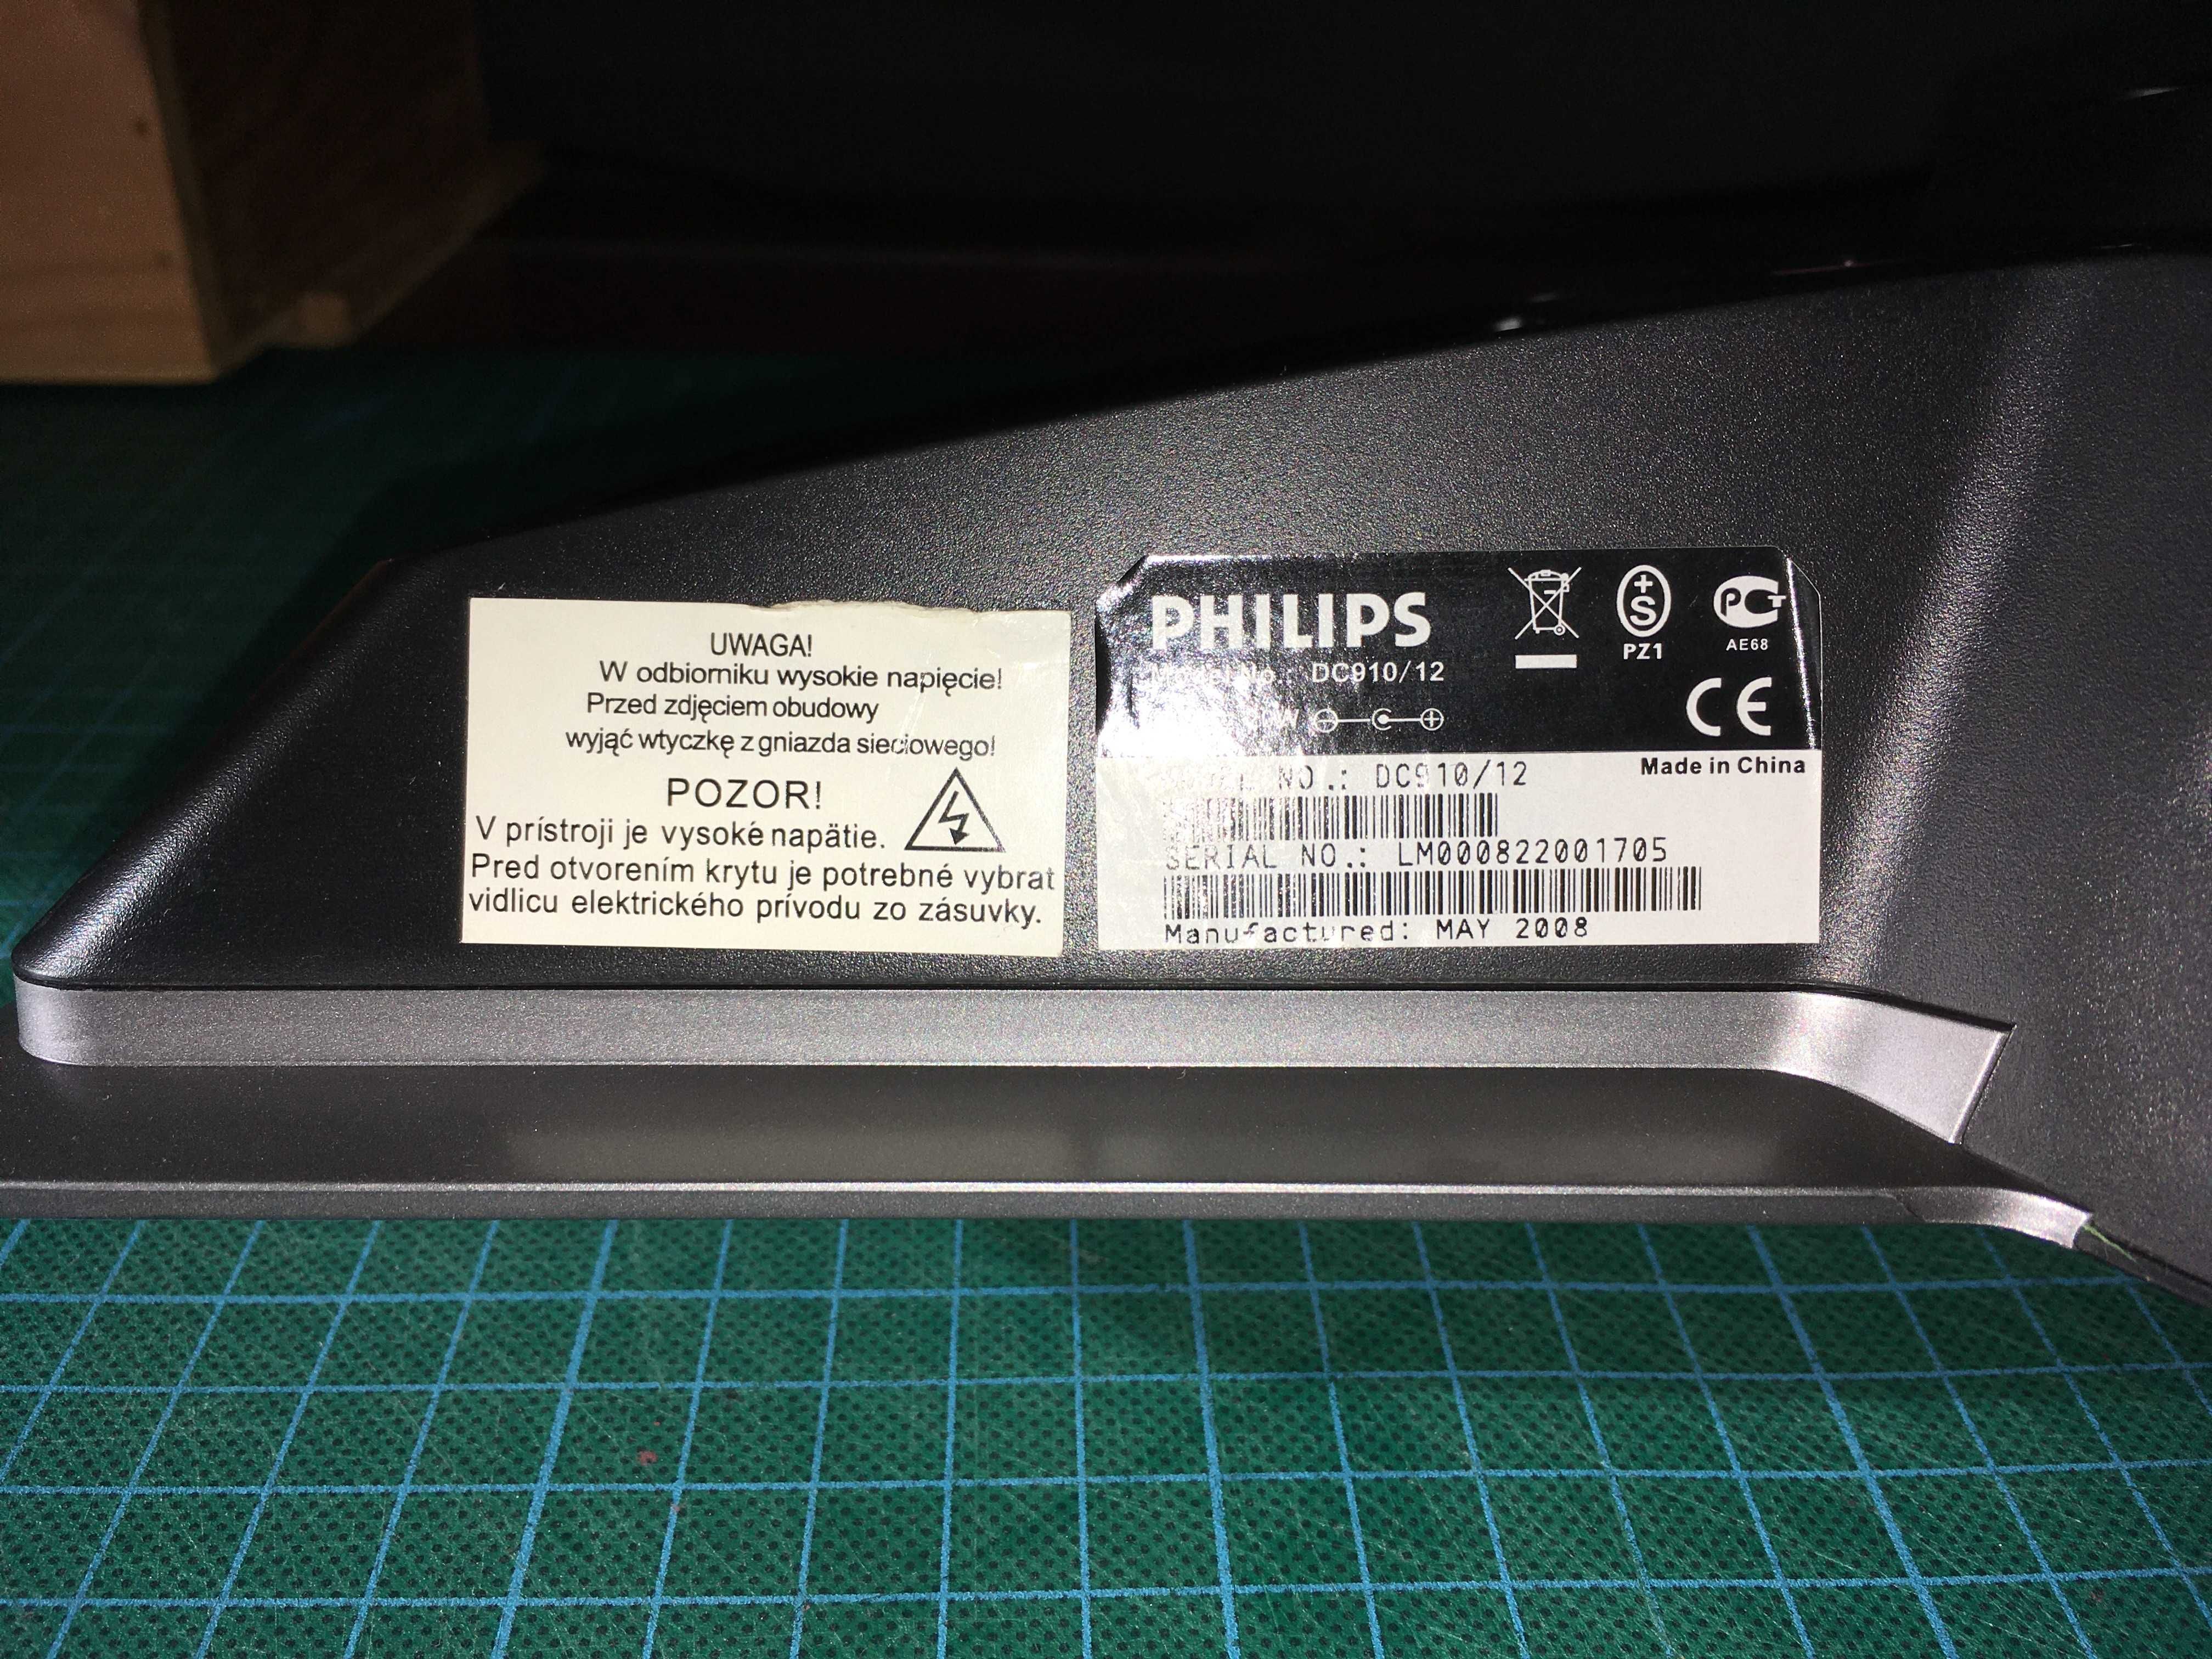 Ipod/Iphone DOCK Philips DC910/12